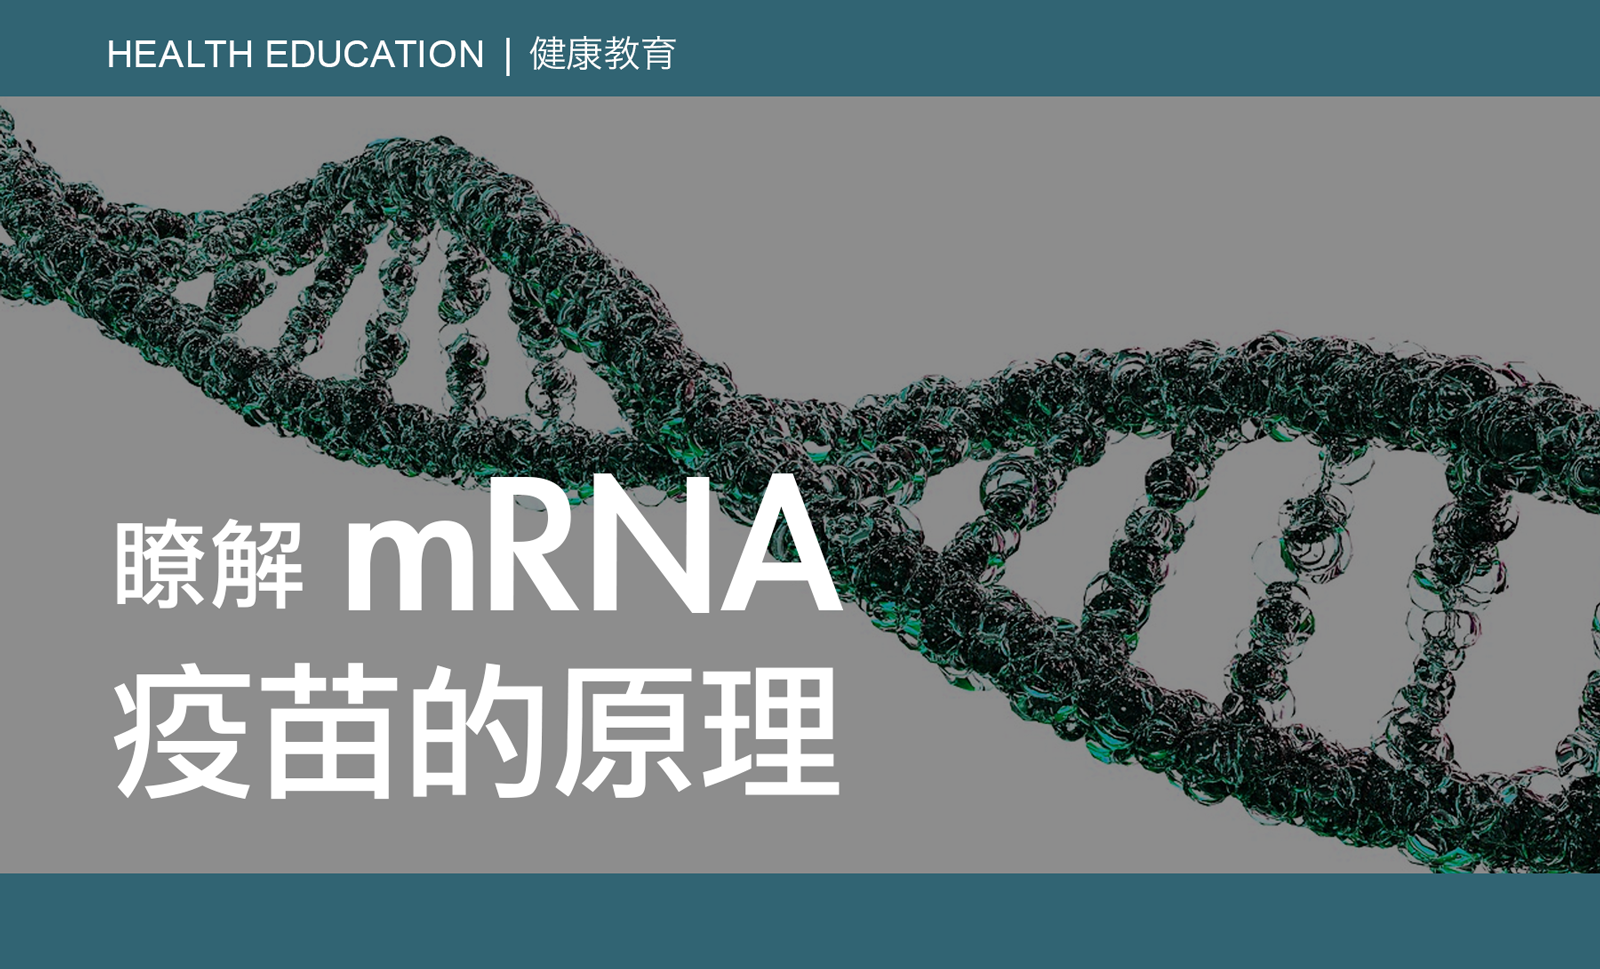 Health Education - mRNA